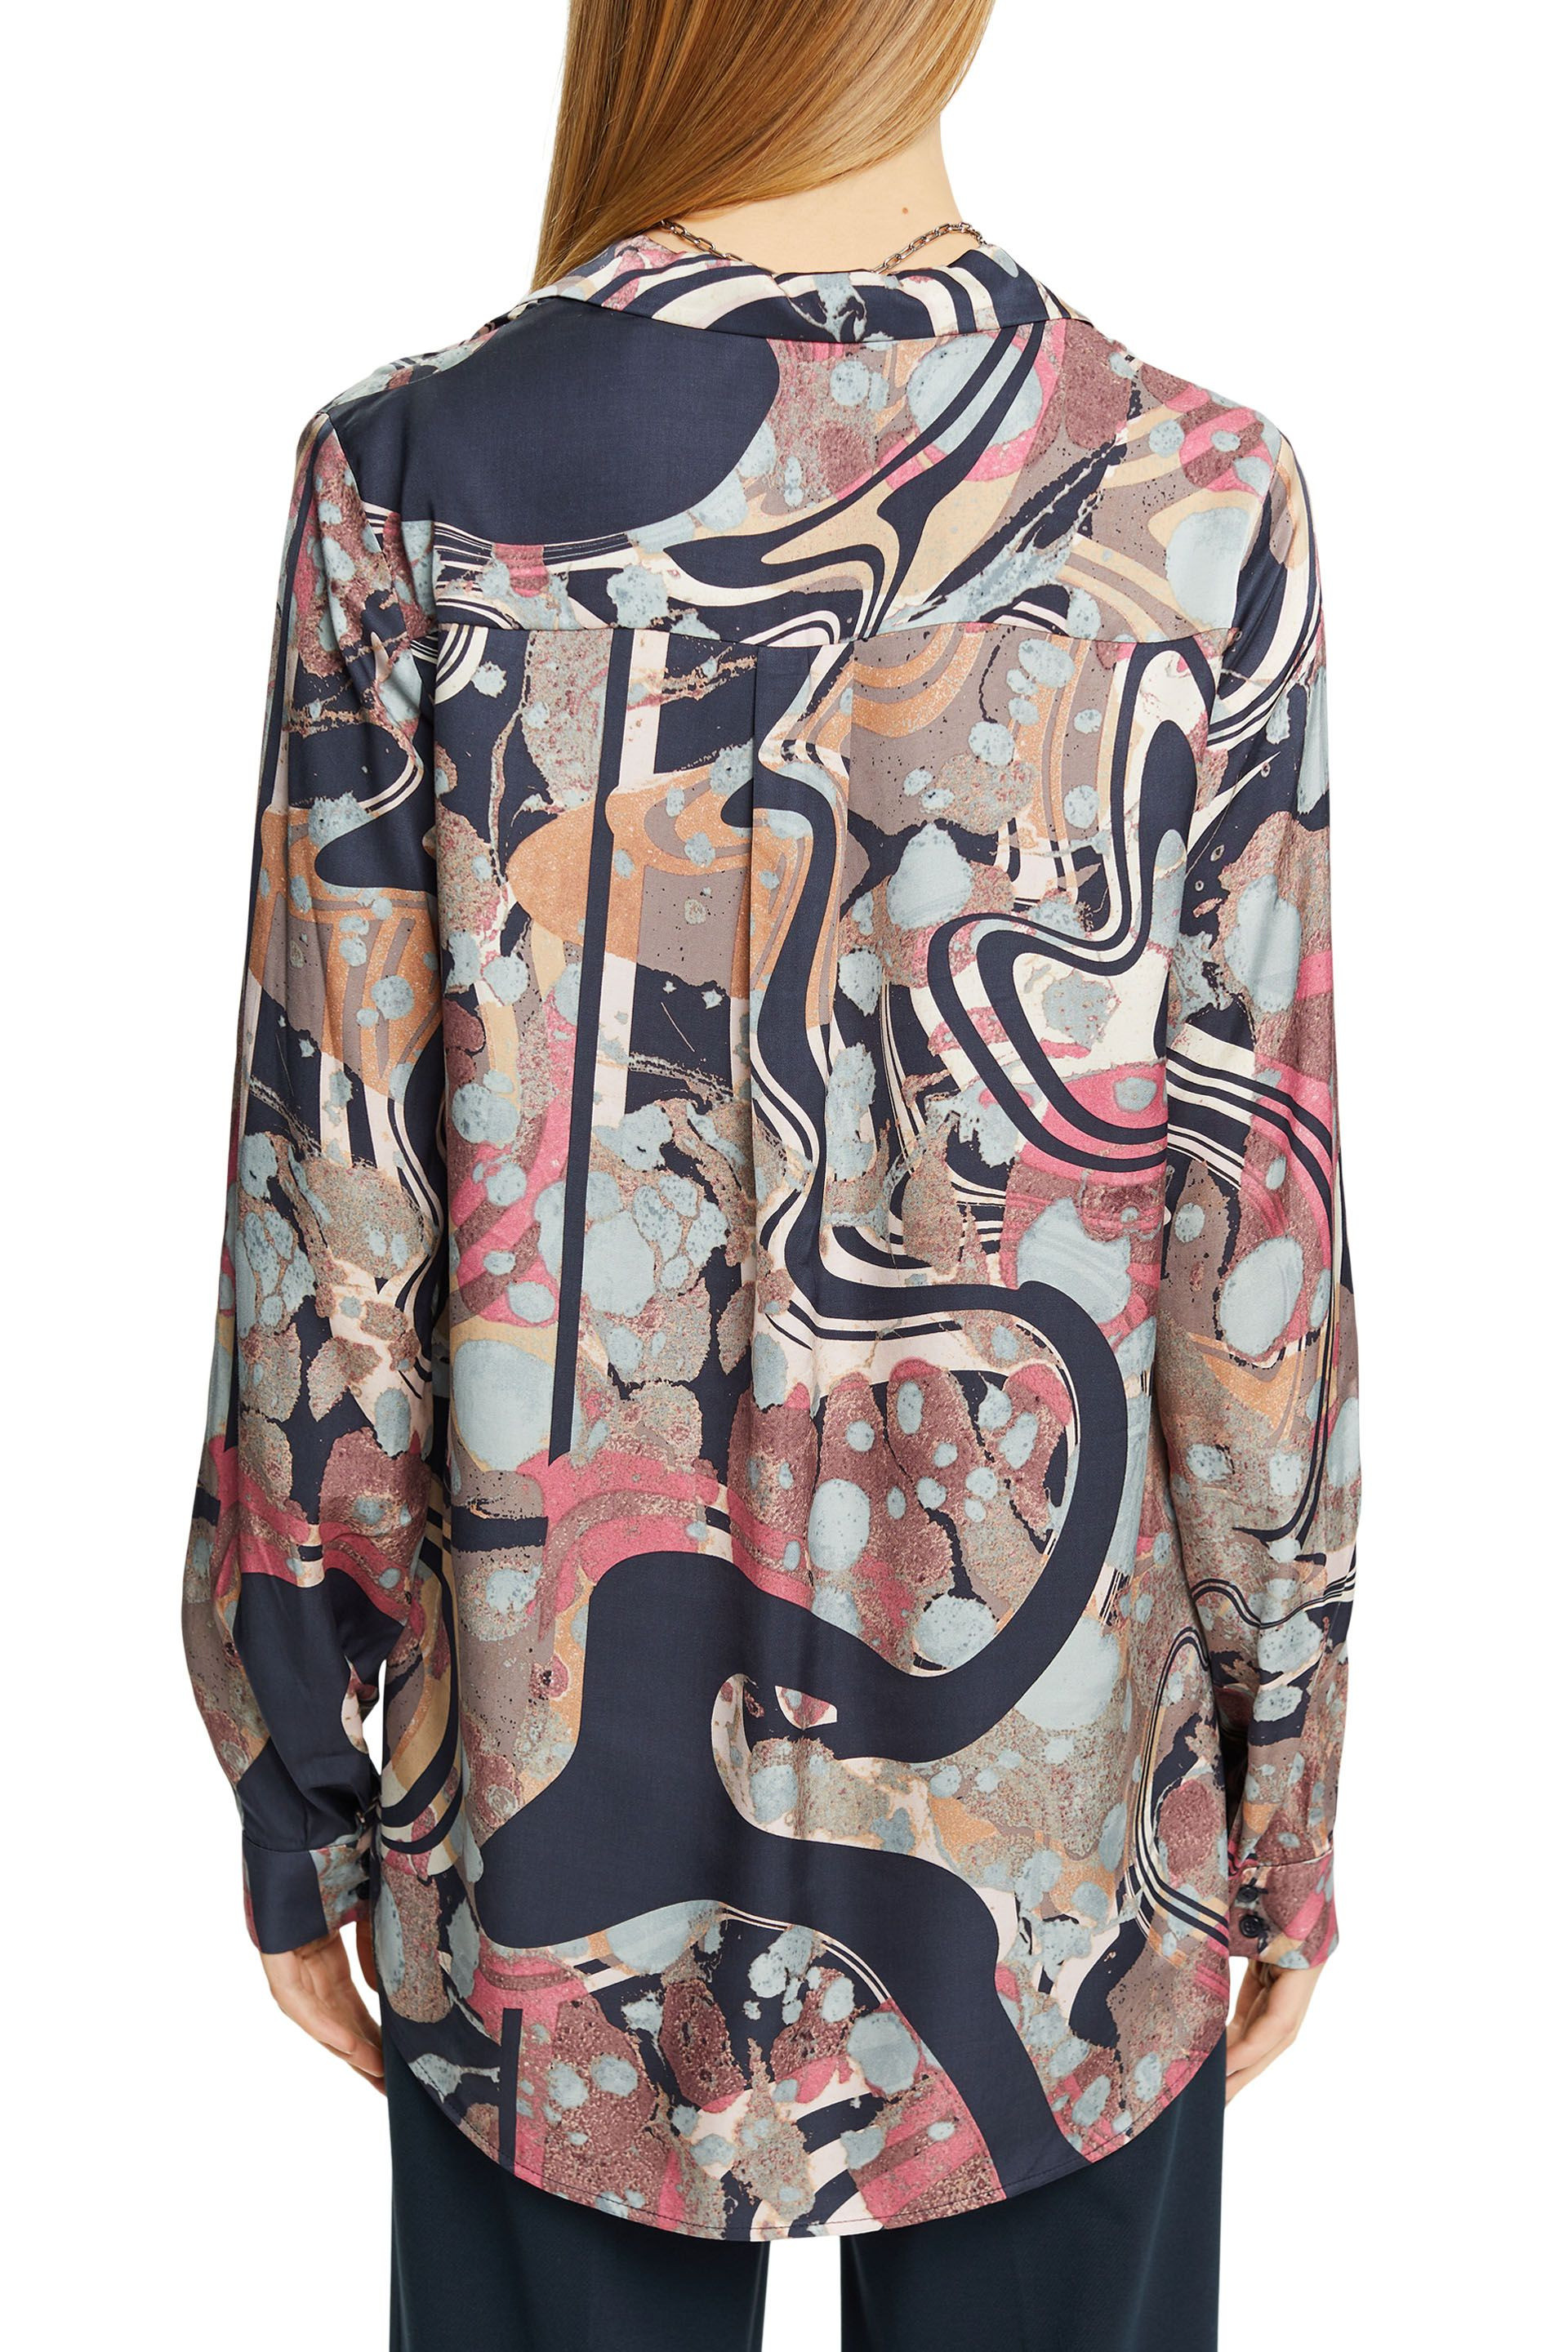 Esprit - Patterned blouse, Multicolor, large image number 2